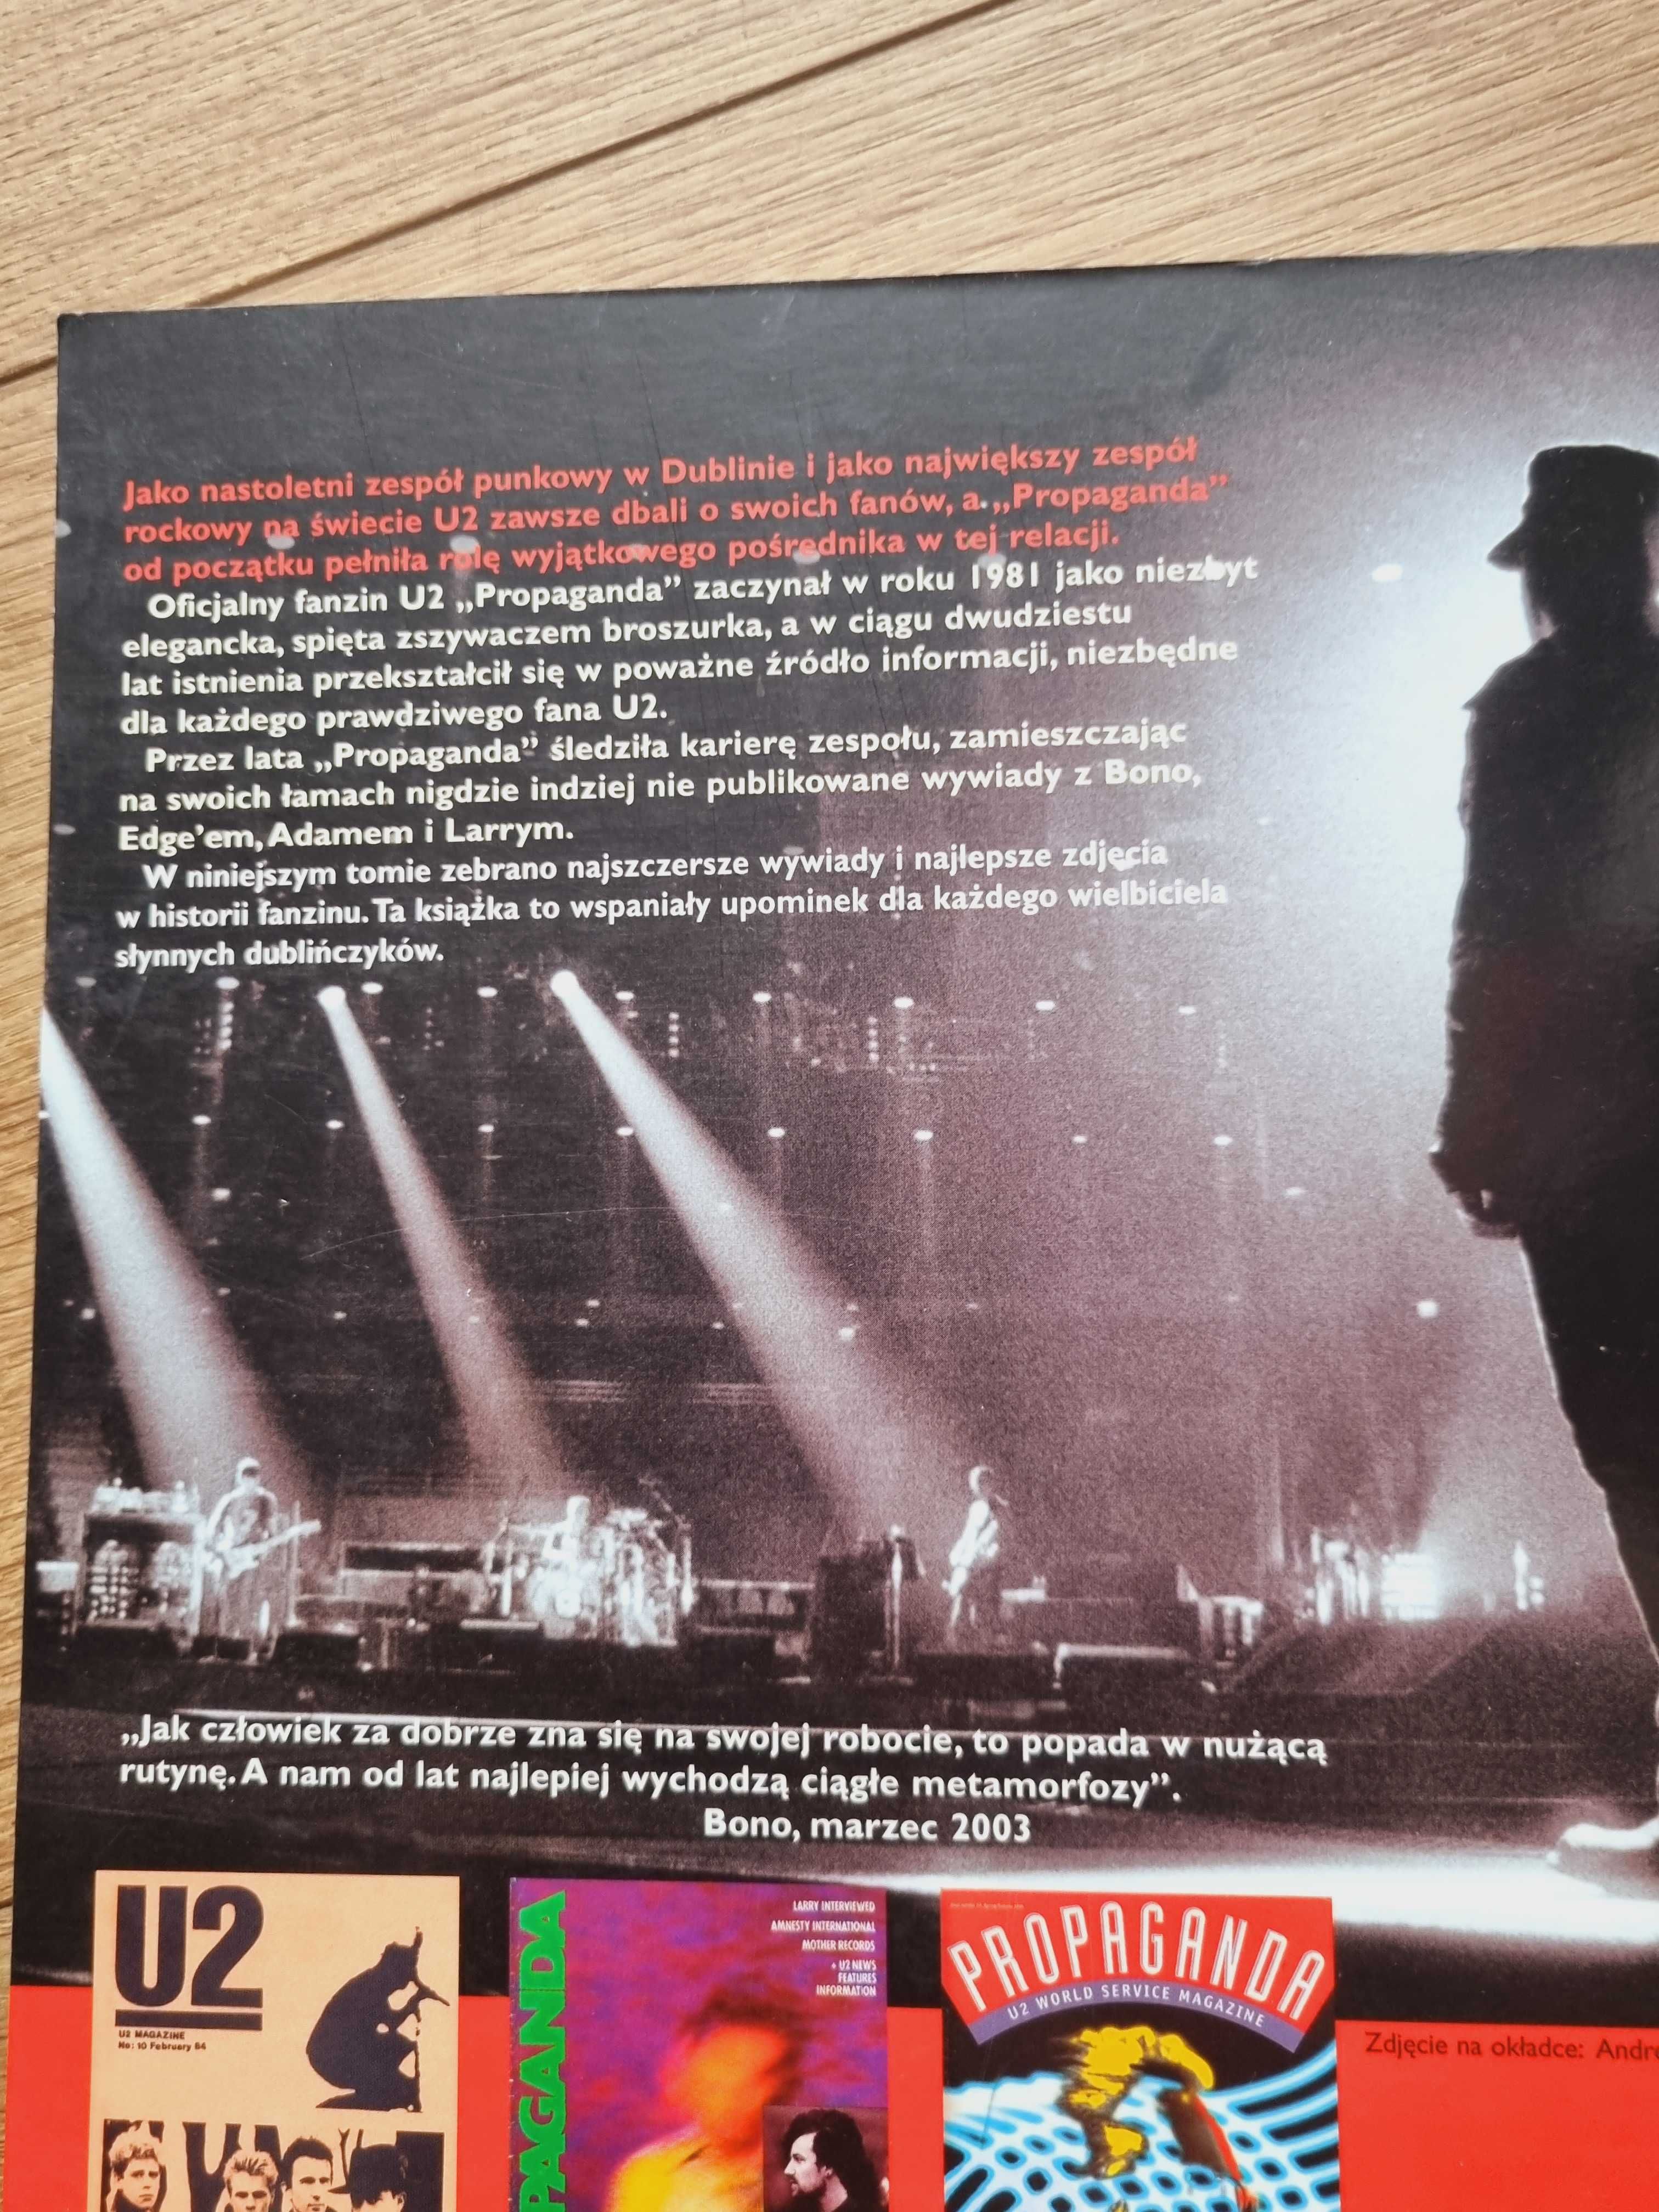 U2 propaganda 20 lat oficjalnego fanizmu